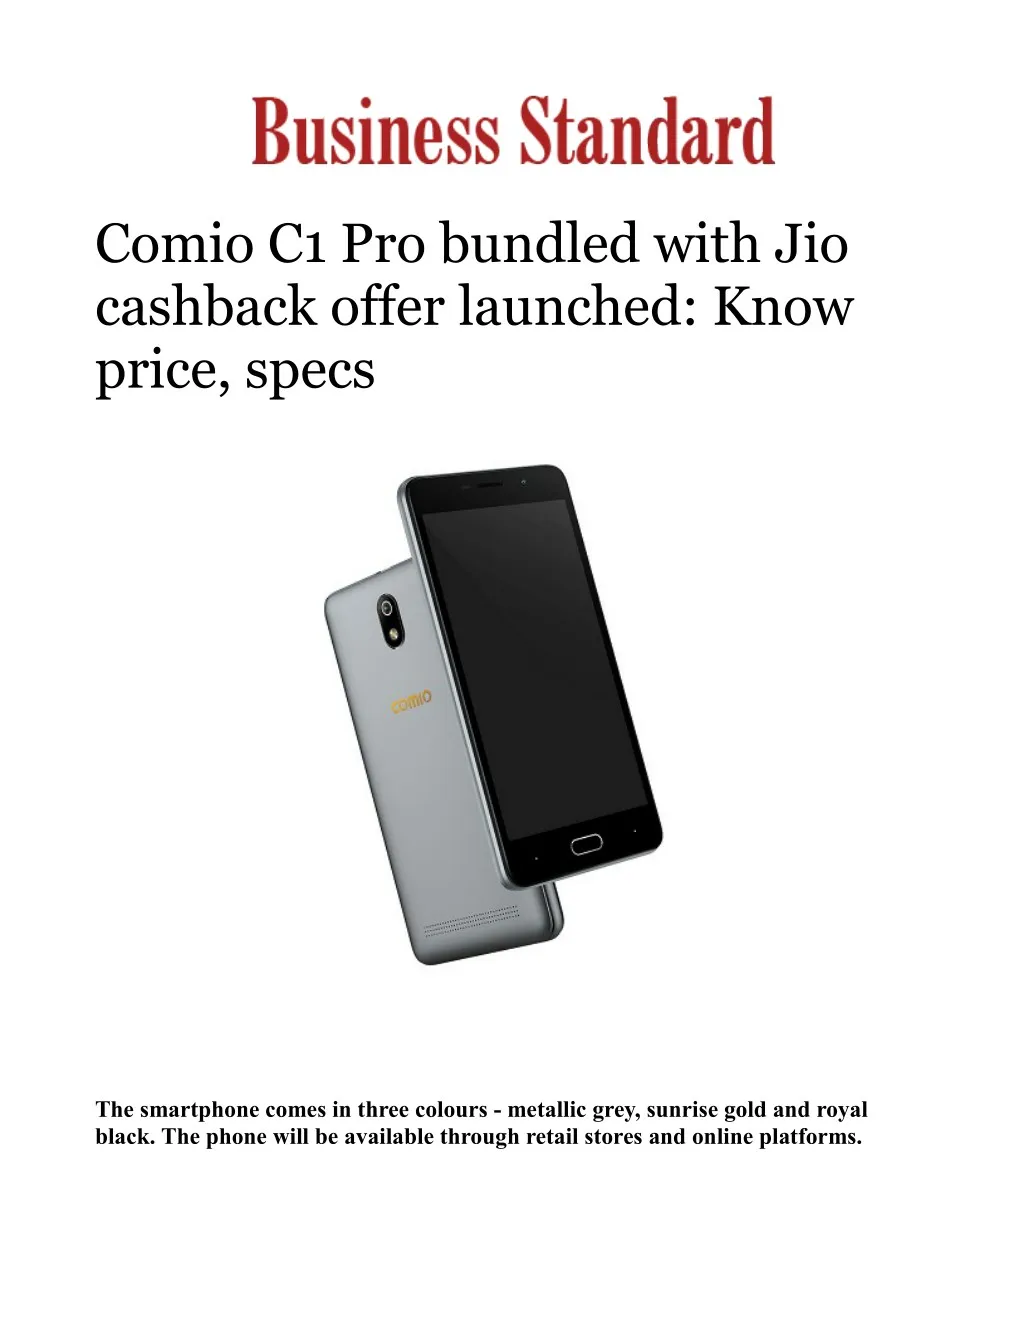 comio c1 pro bundled with jio cashback offer